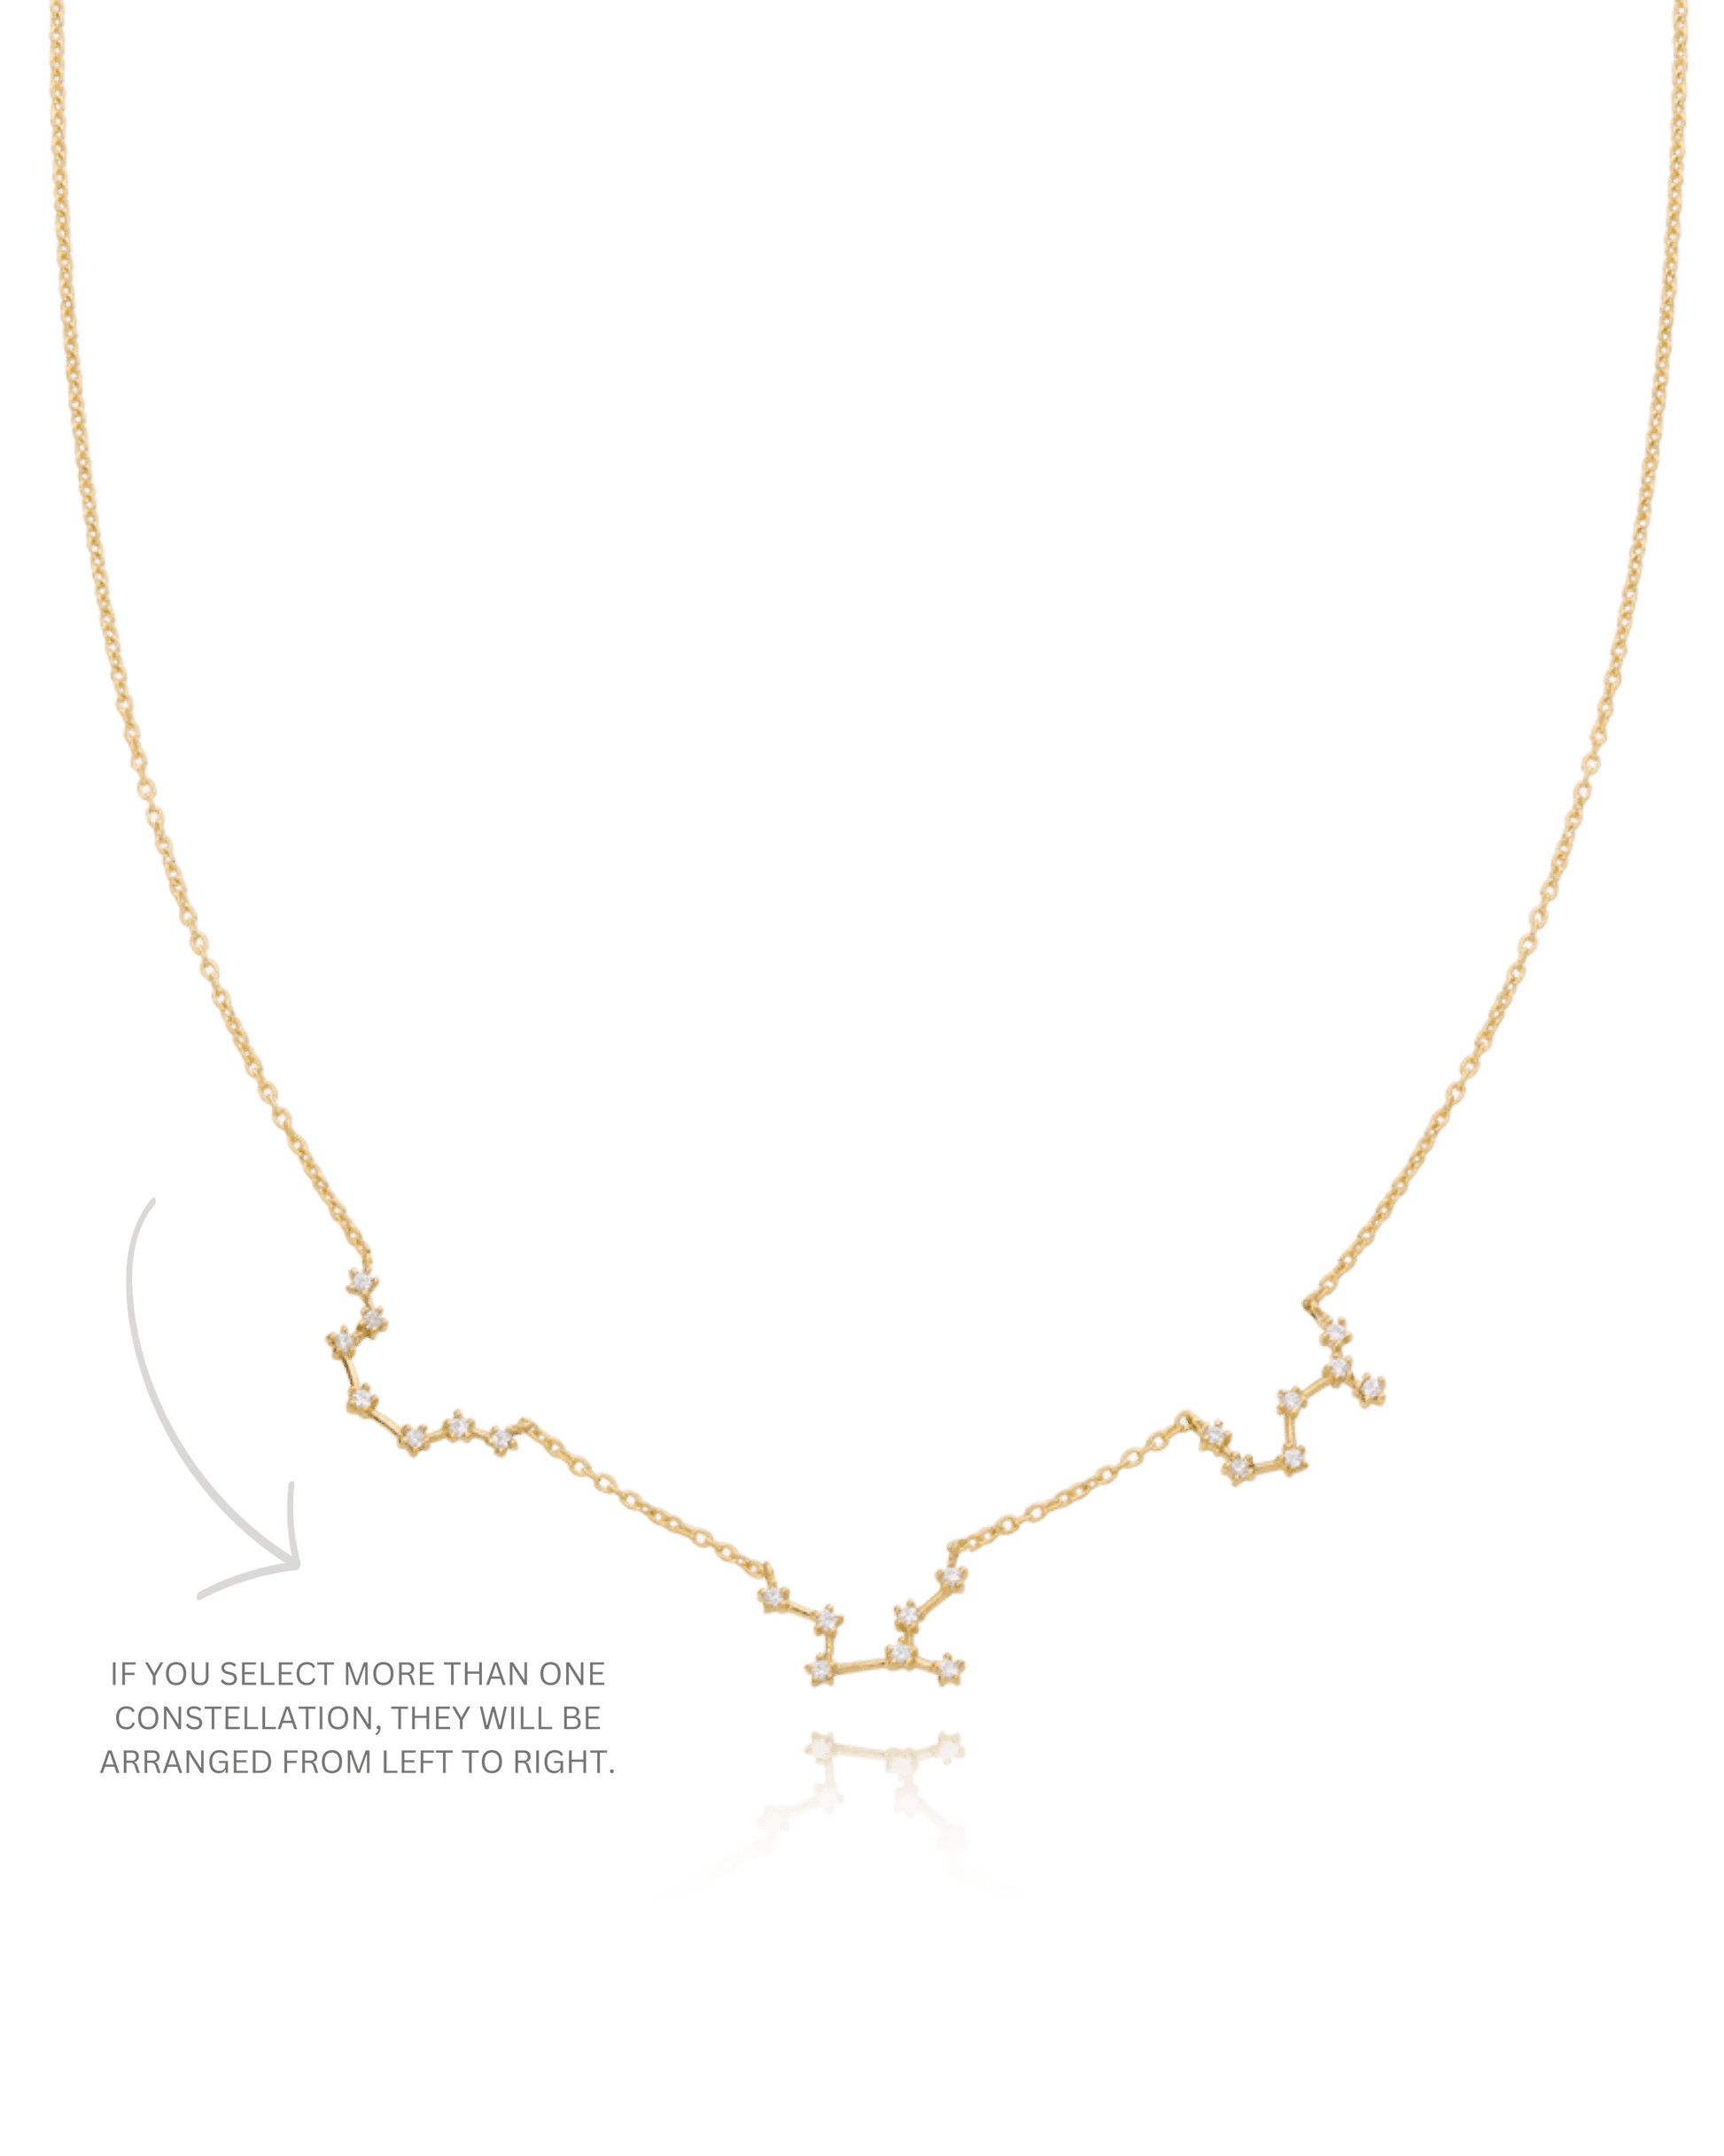 Sets of Constellation Necklaces - 18K Rose Vermeil Necklaces magal-dev 